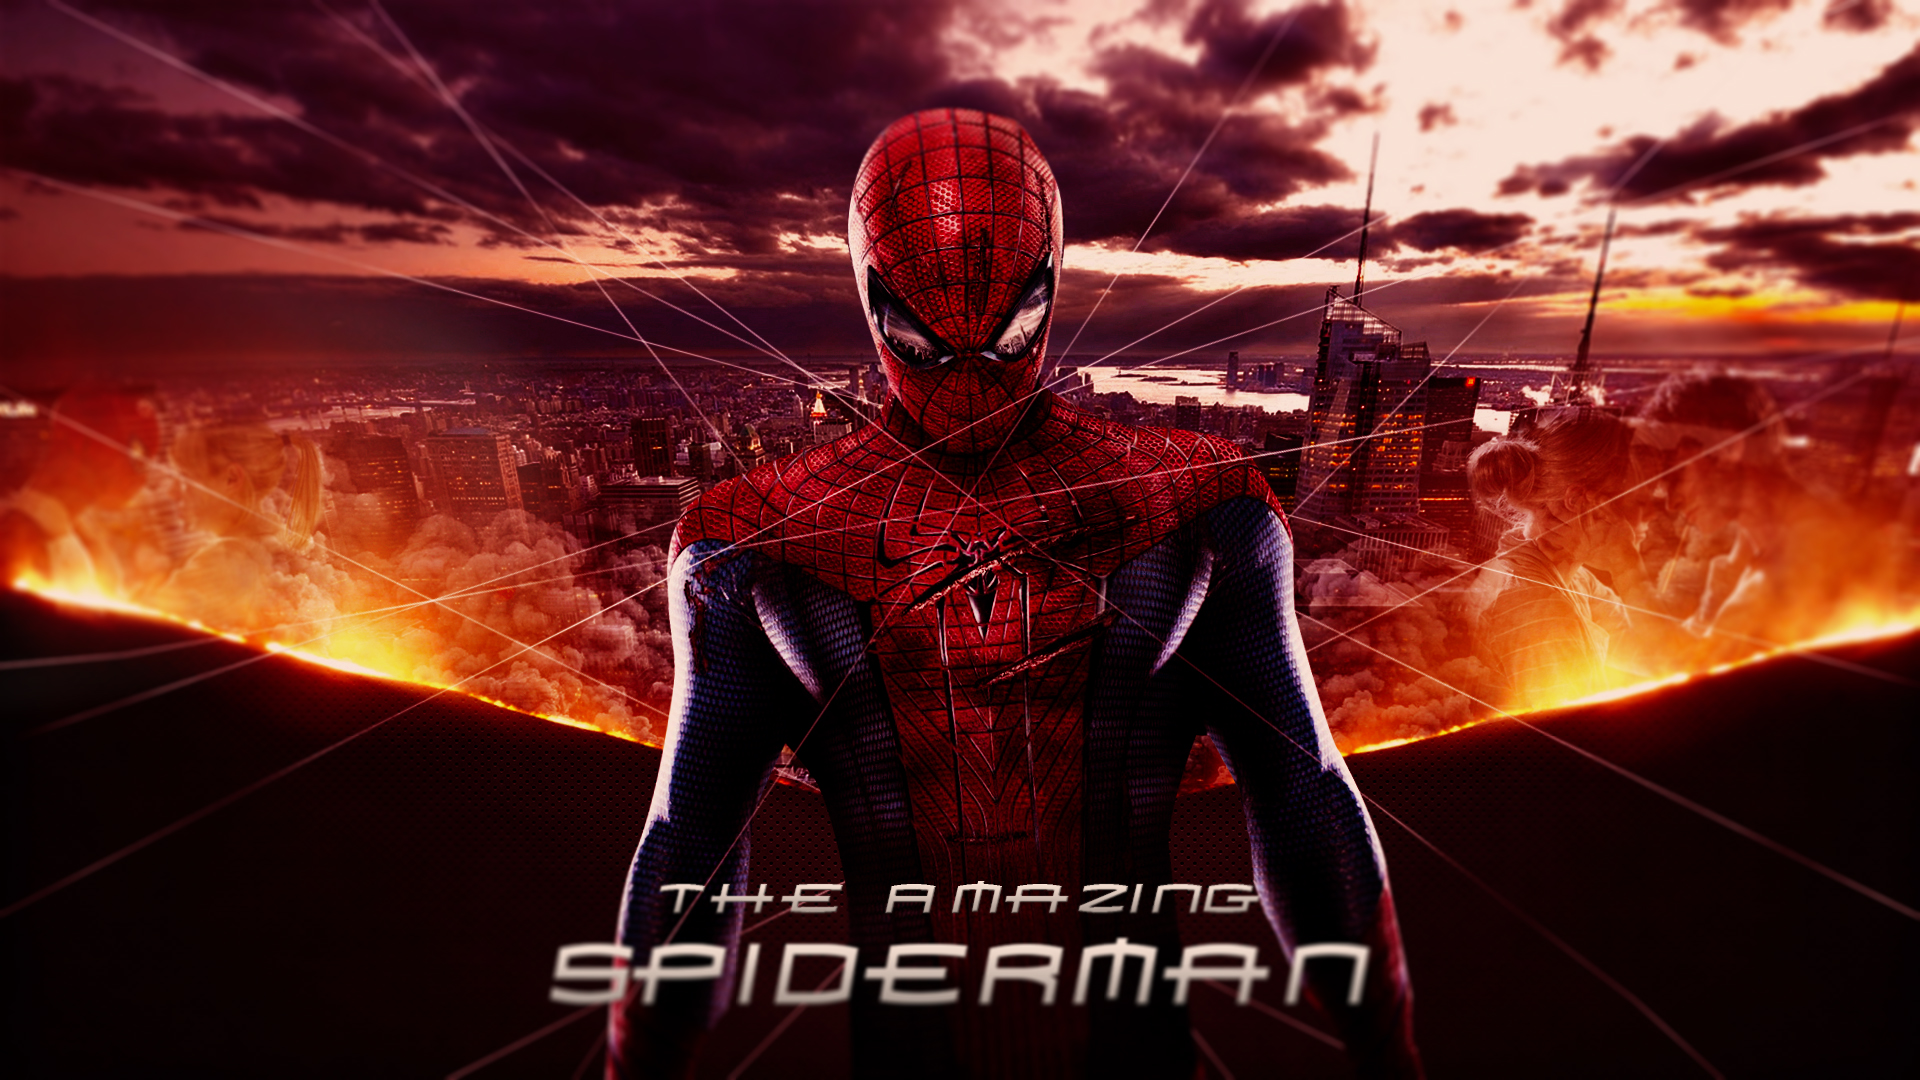 Spiderman Wallpaper - Empire State Building - HD Wallpaper 